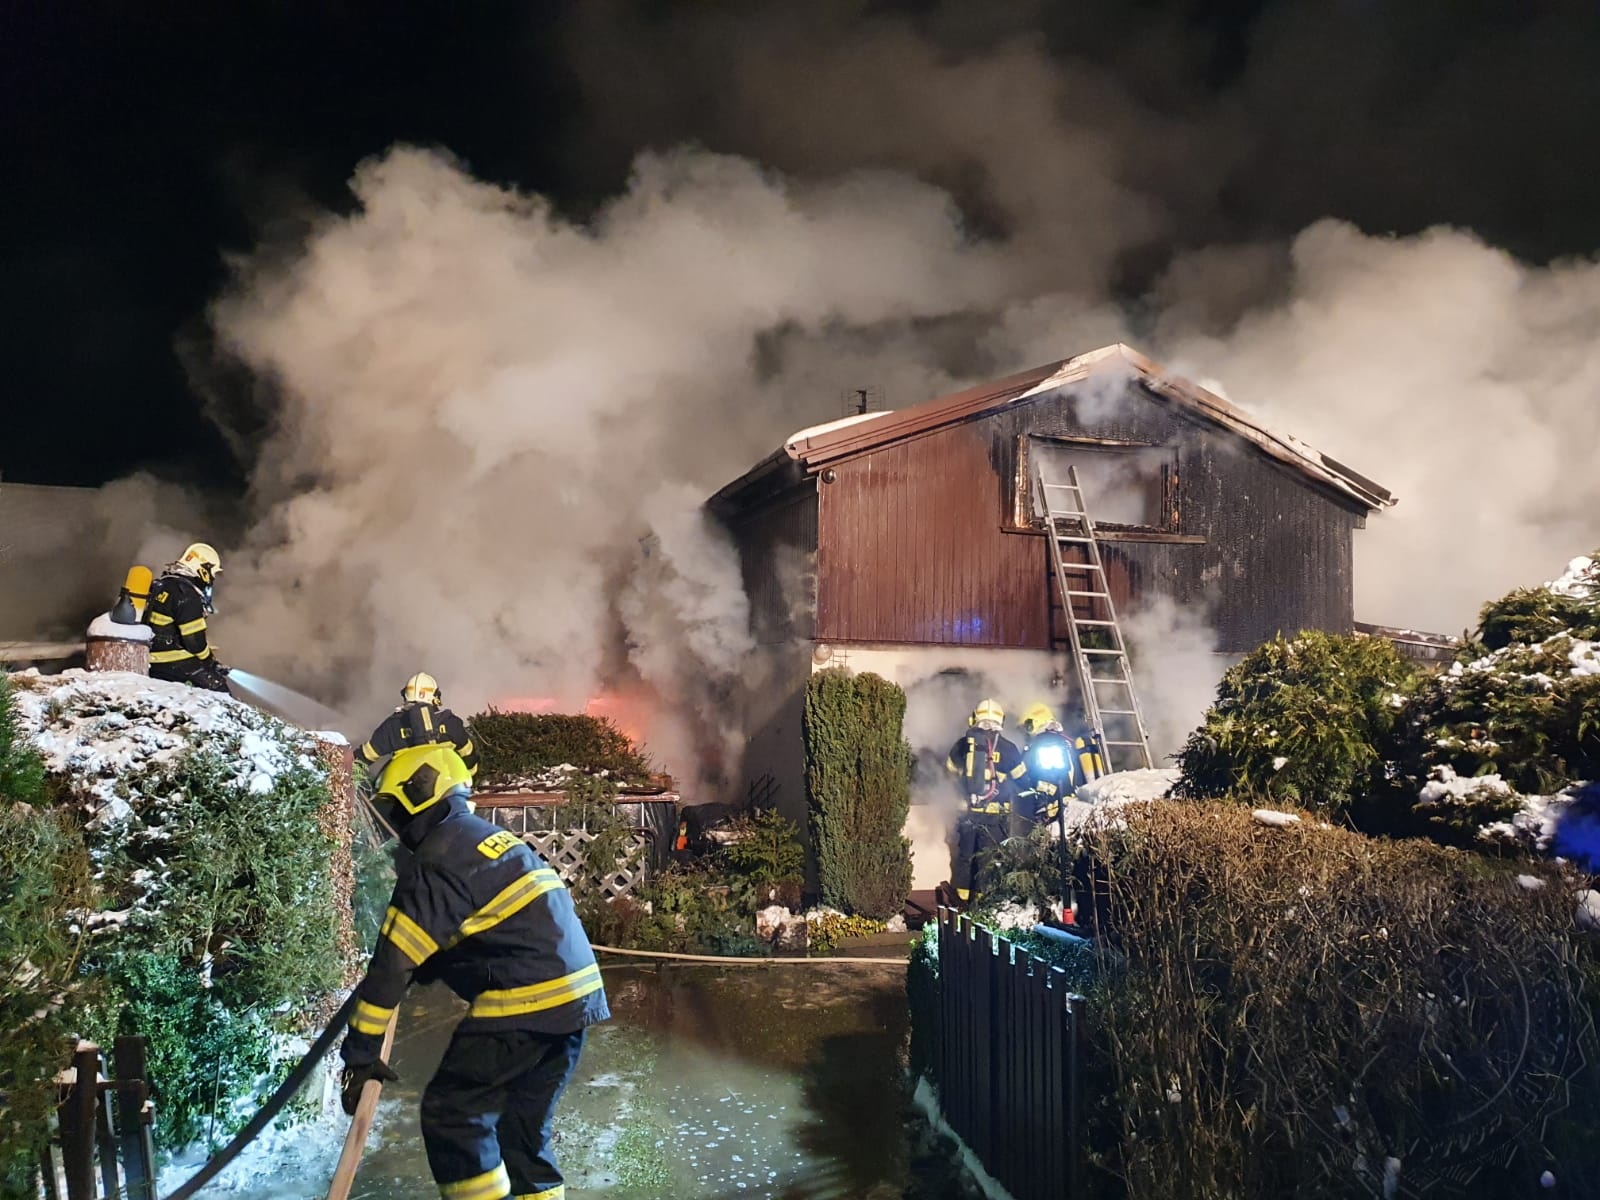 požár chaty Třemošnice12-1-2021 (3).jpg